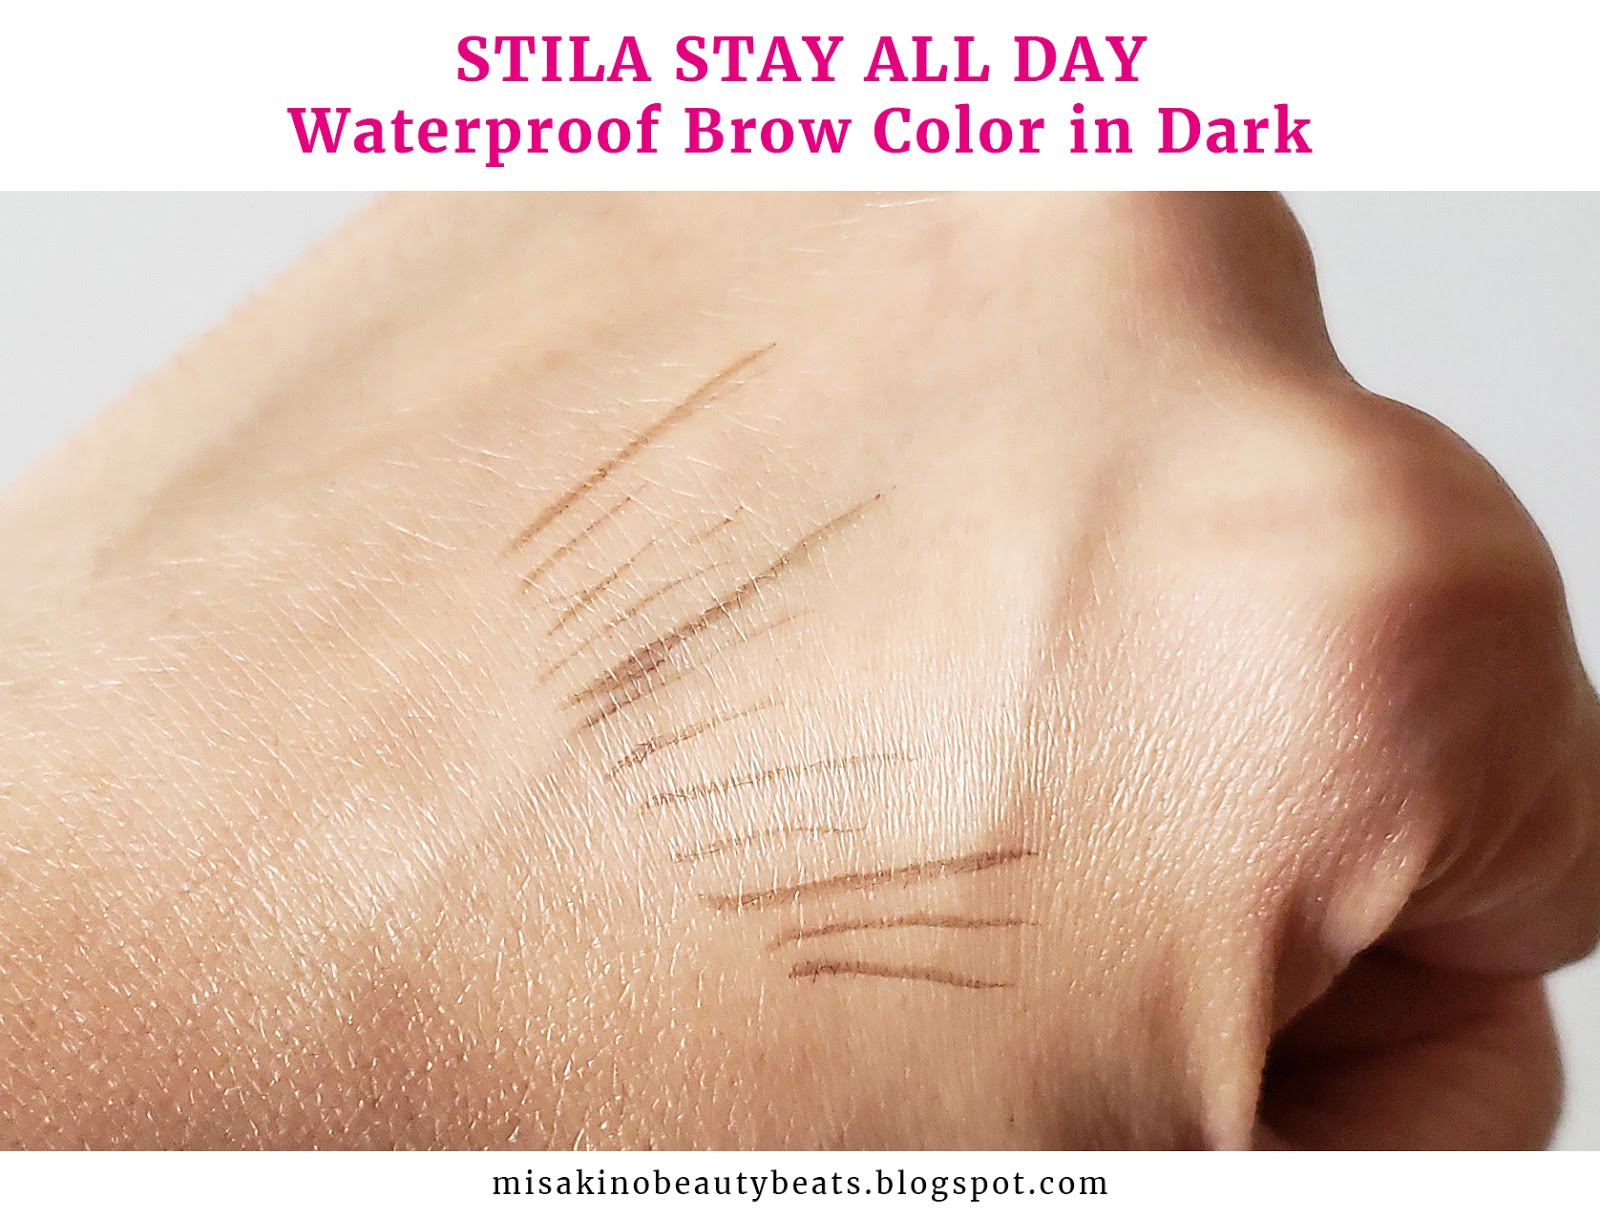 Stila Stay All Day Waterproof Brow Color - MISAKINO